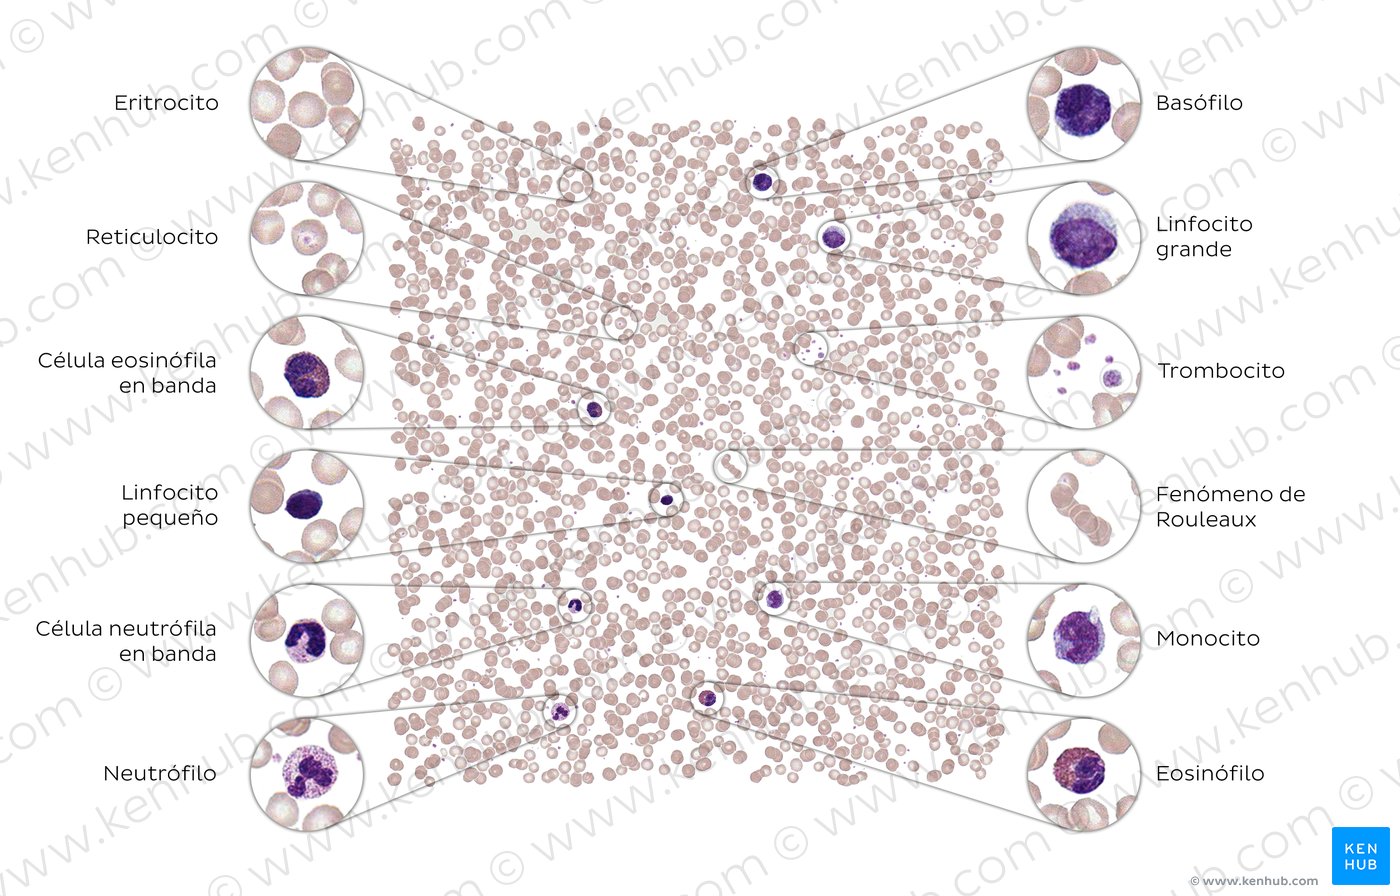 Tipos de células sanguíneas | Kenhub